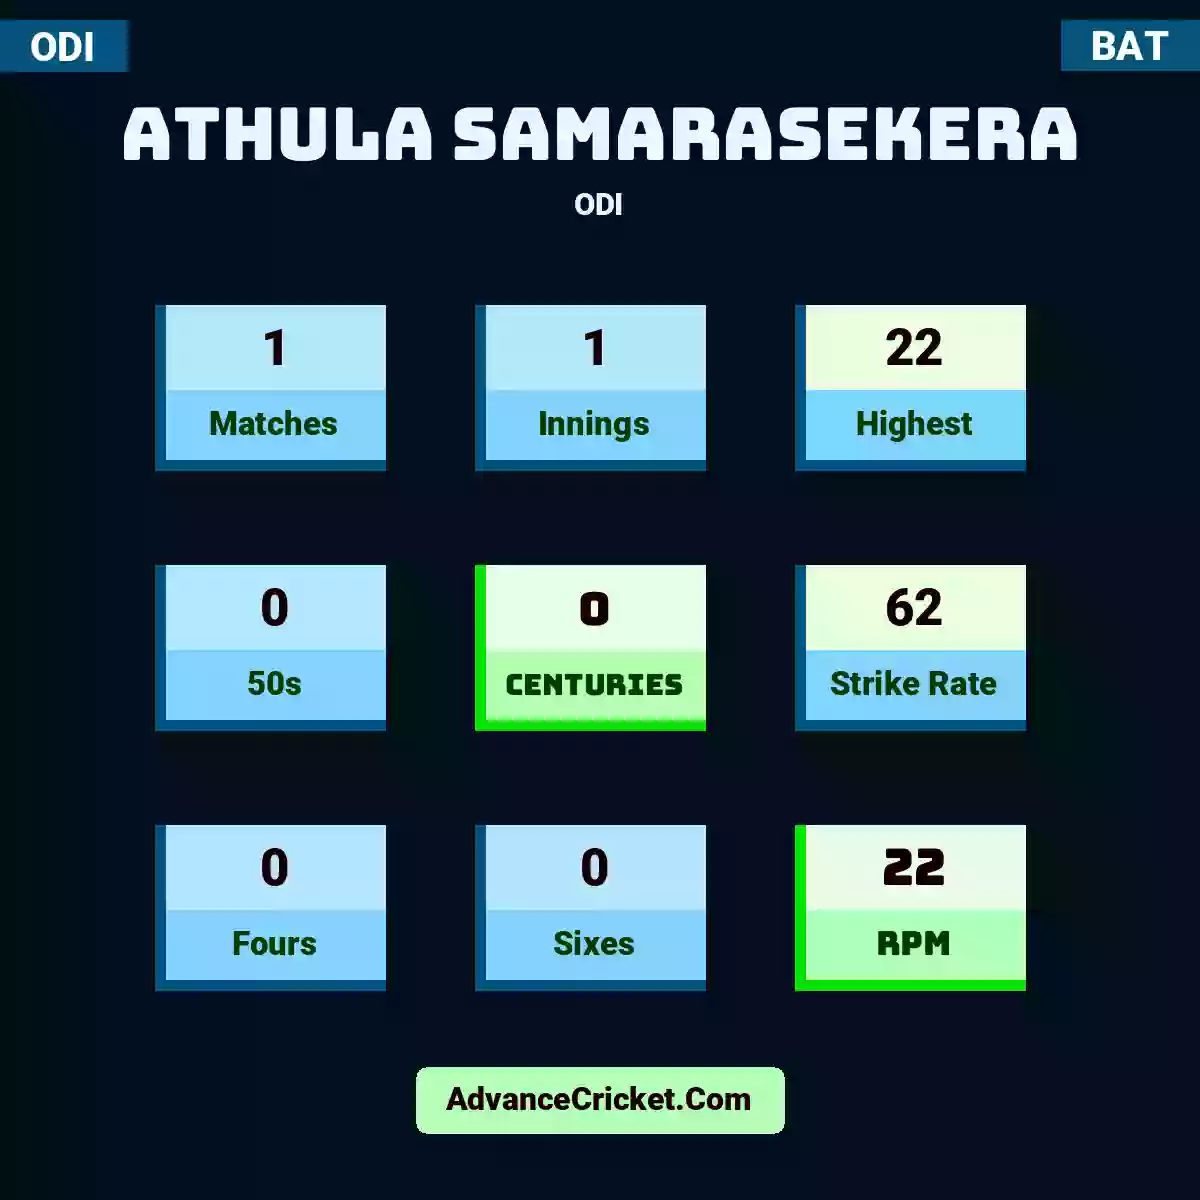 Athula Samarasekera ODI , Athula Samarasekera played 1 matches, scored 22 runs as highest, 0 half-centuries, and 0 centuries, with a strike rate of 62. A.Samarasekera hit 0 fours and 0 sixes, with an RPM of 22.